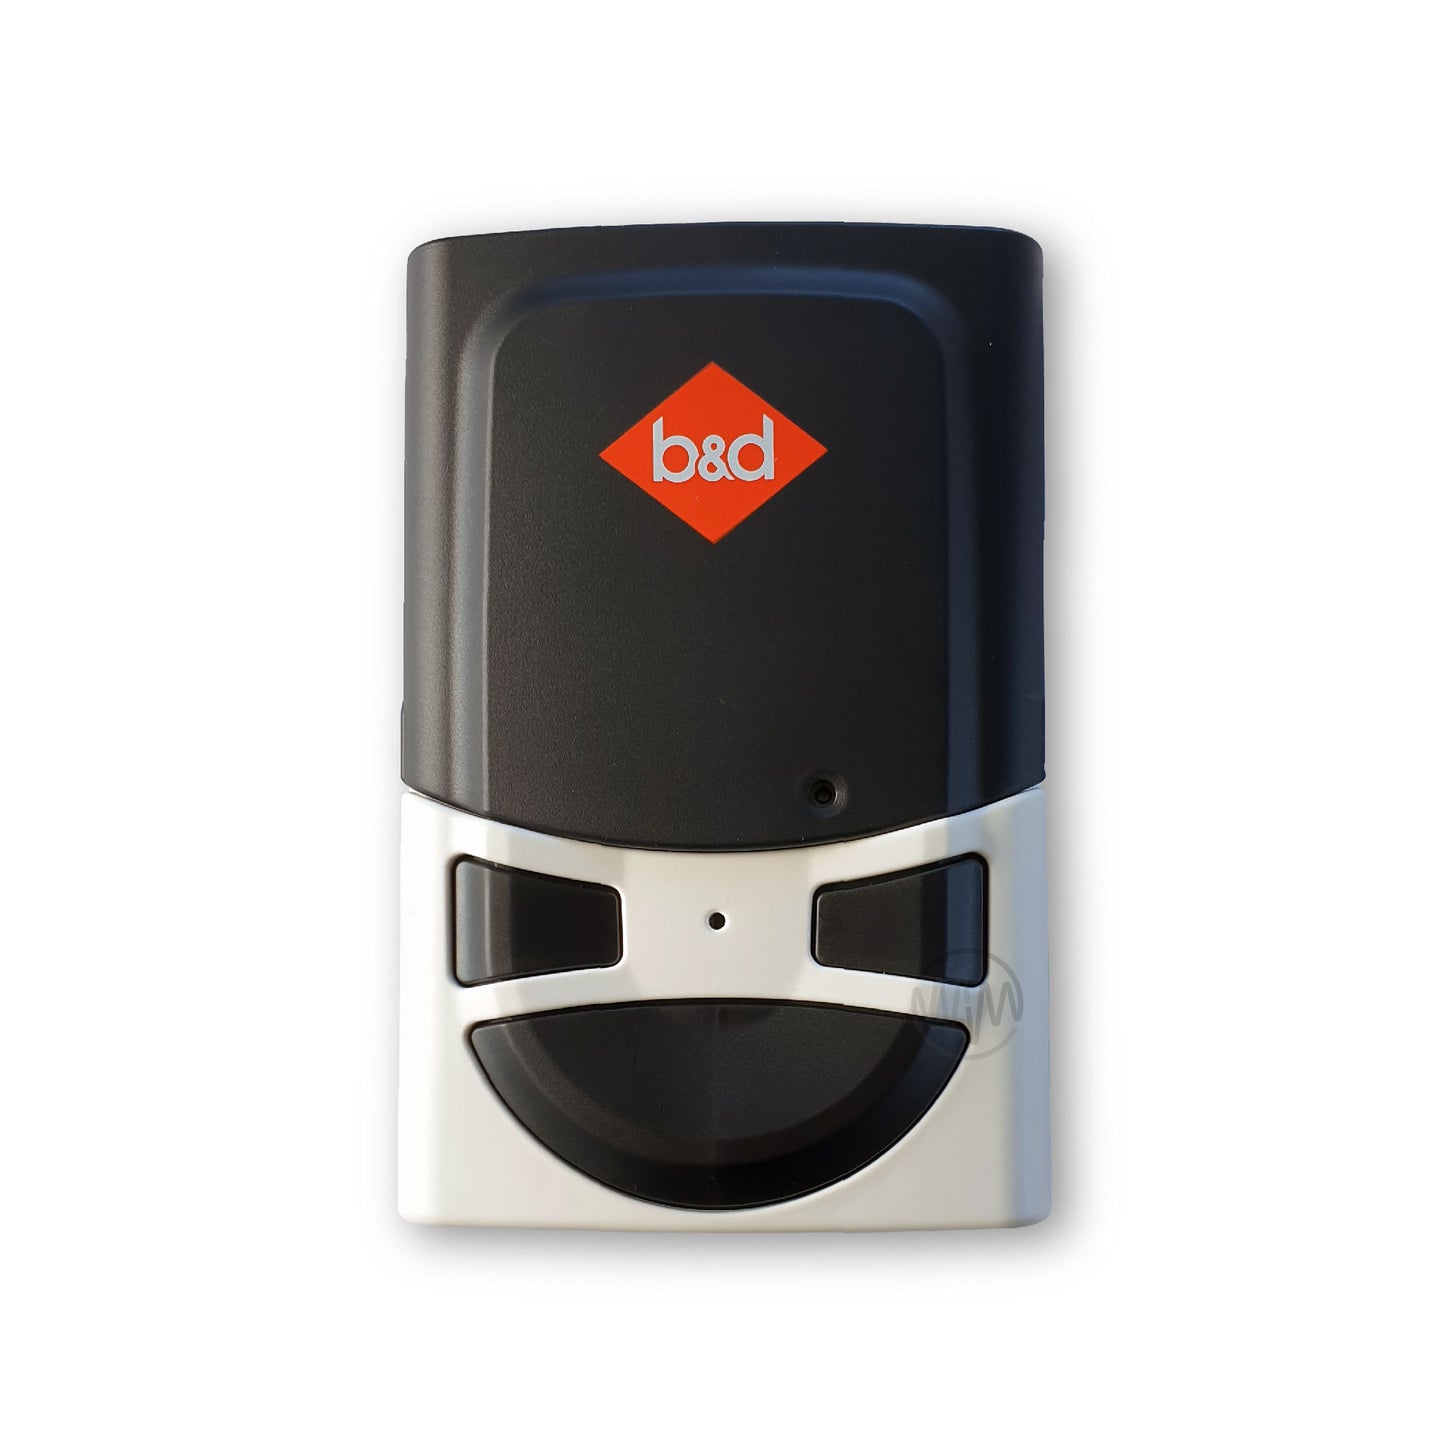 B&D WTB-7 Wireless Wall Button